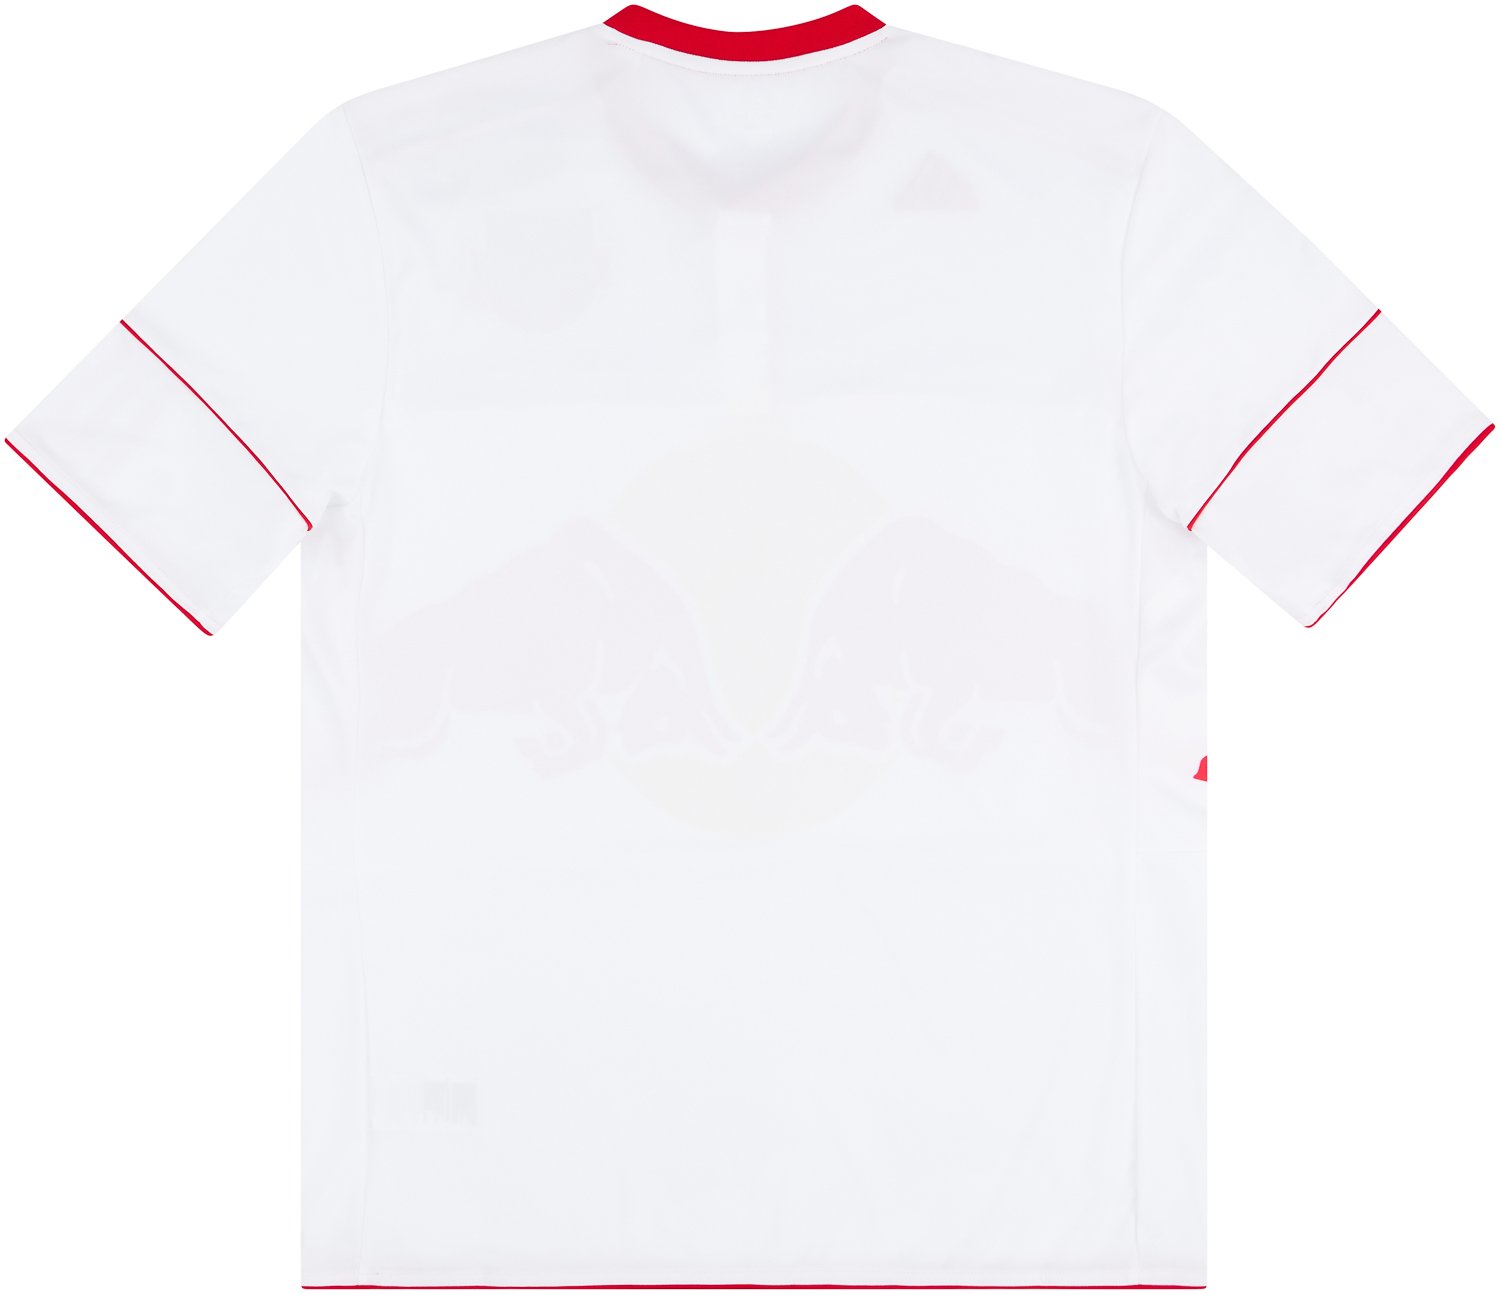 Adidas Henry New York NY Red Bulls 2010 2011 Debut Home Soccer Jersey Shirt XL SKU#P57131